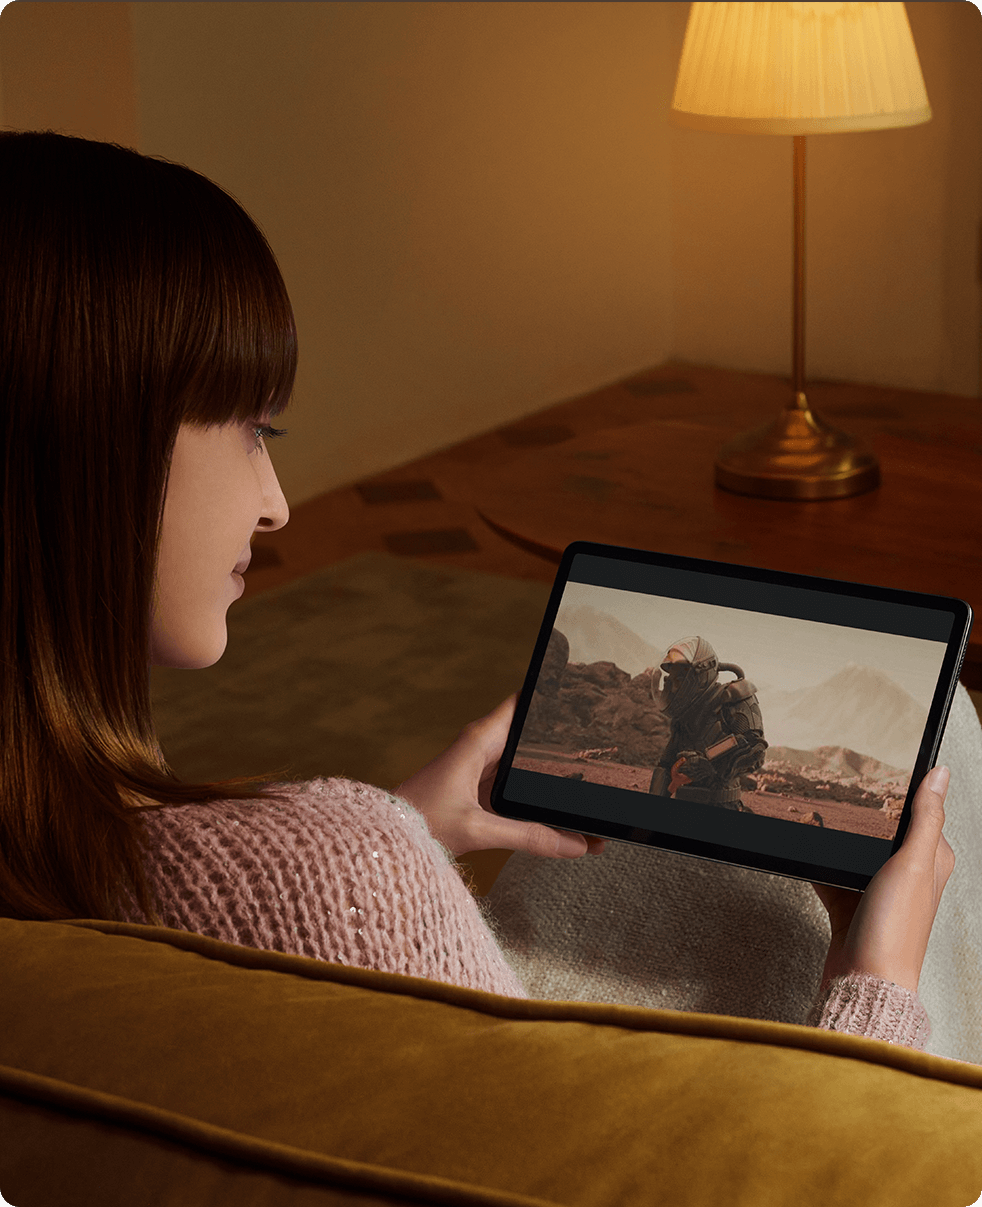 Review: Xiaomi Pad 5 (tablet 11 WQHD+ 120 Hz y Snapdragon 860)